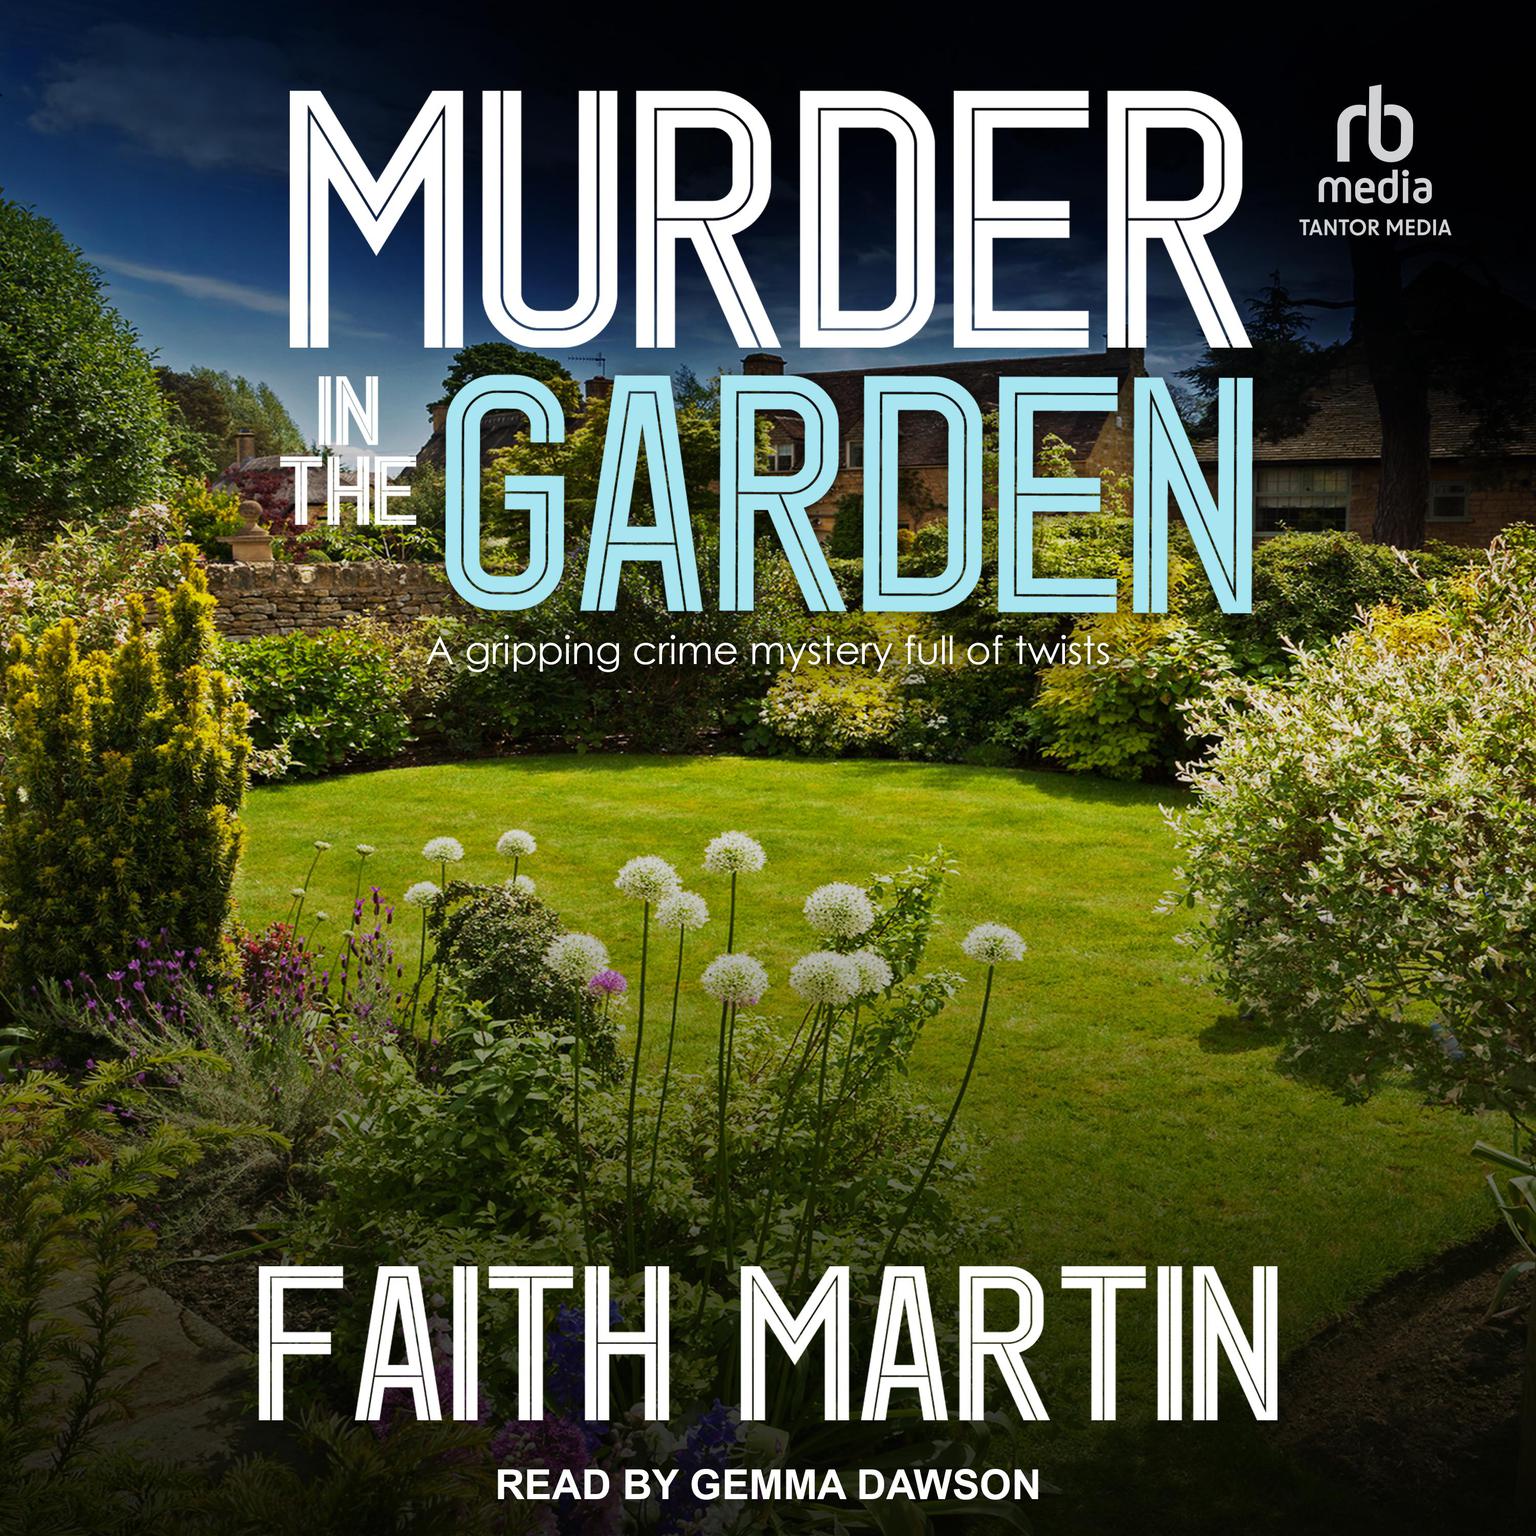 Murder in the Garden Audiobook, by Faith Martin